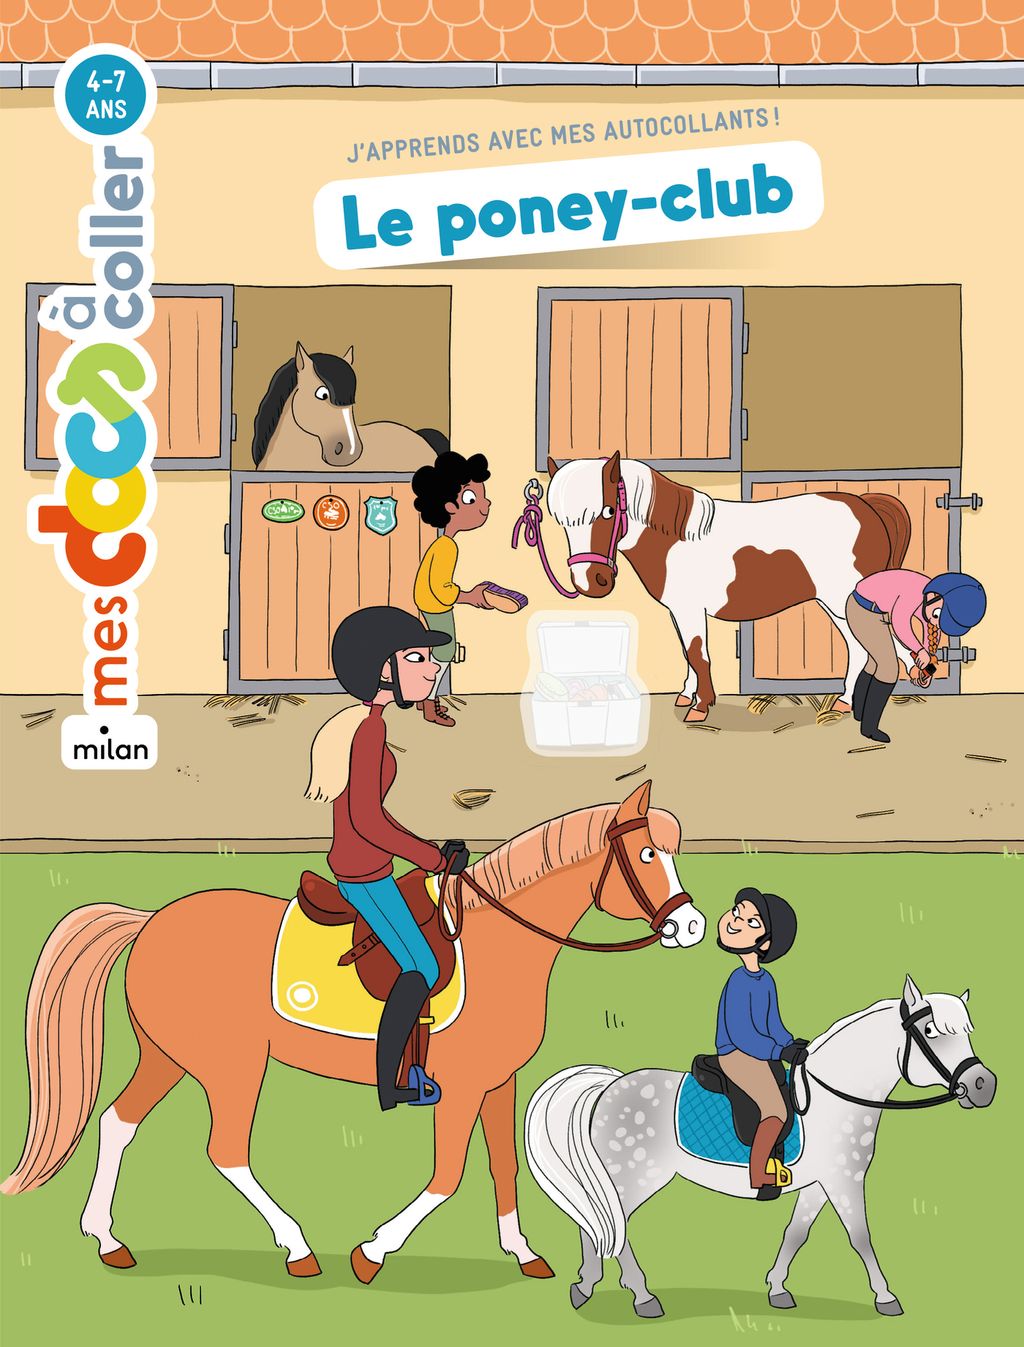 « Le poney-club » cover